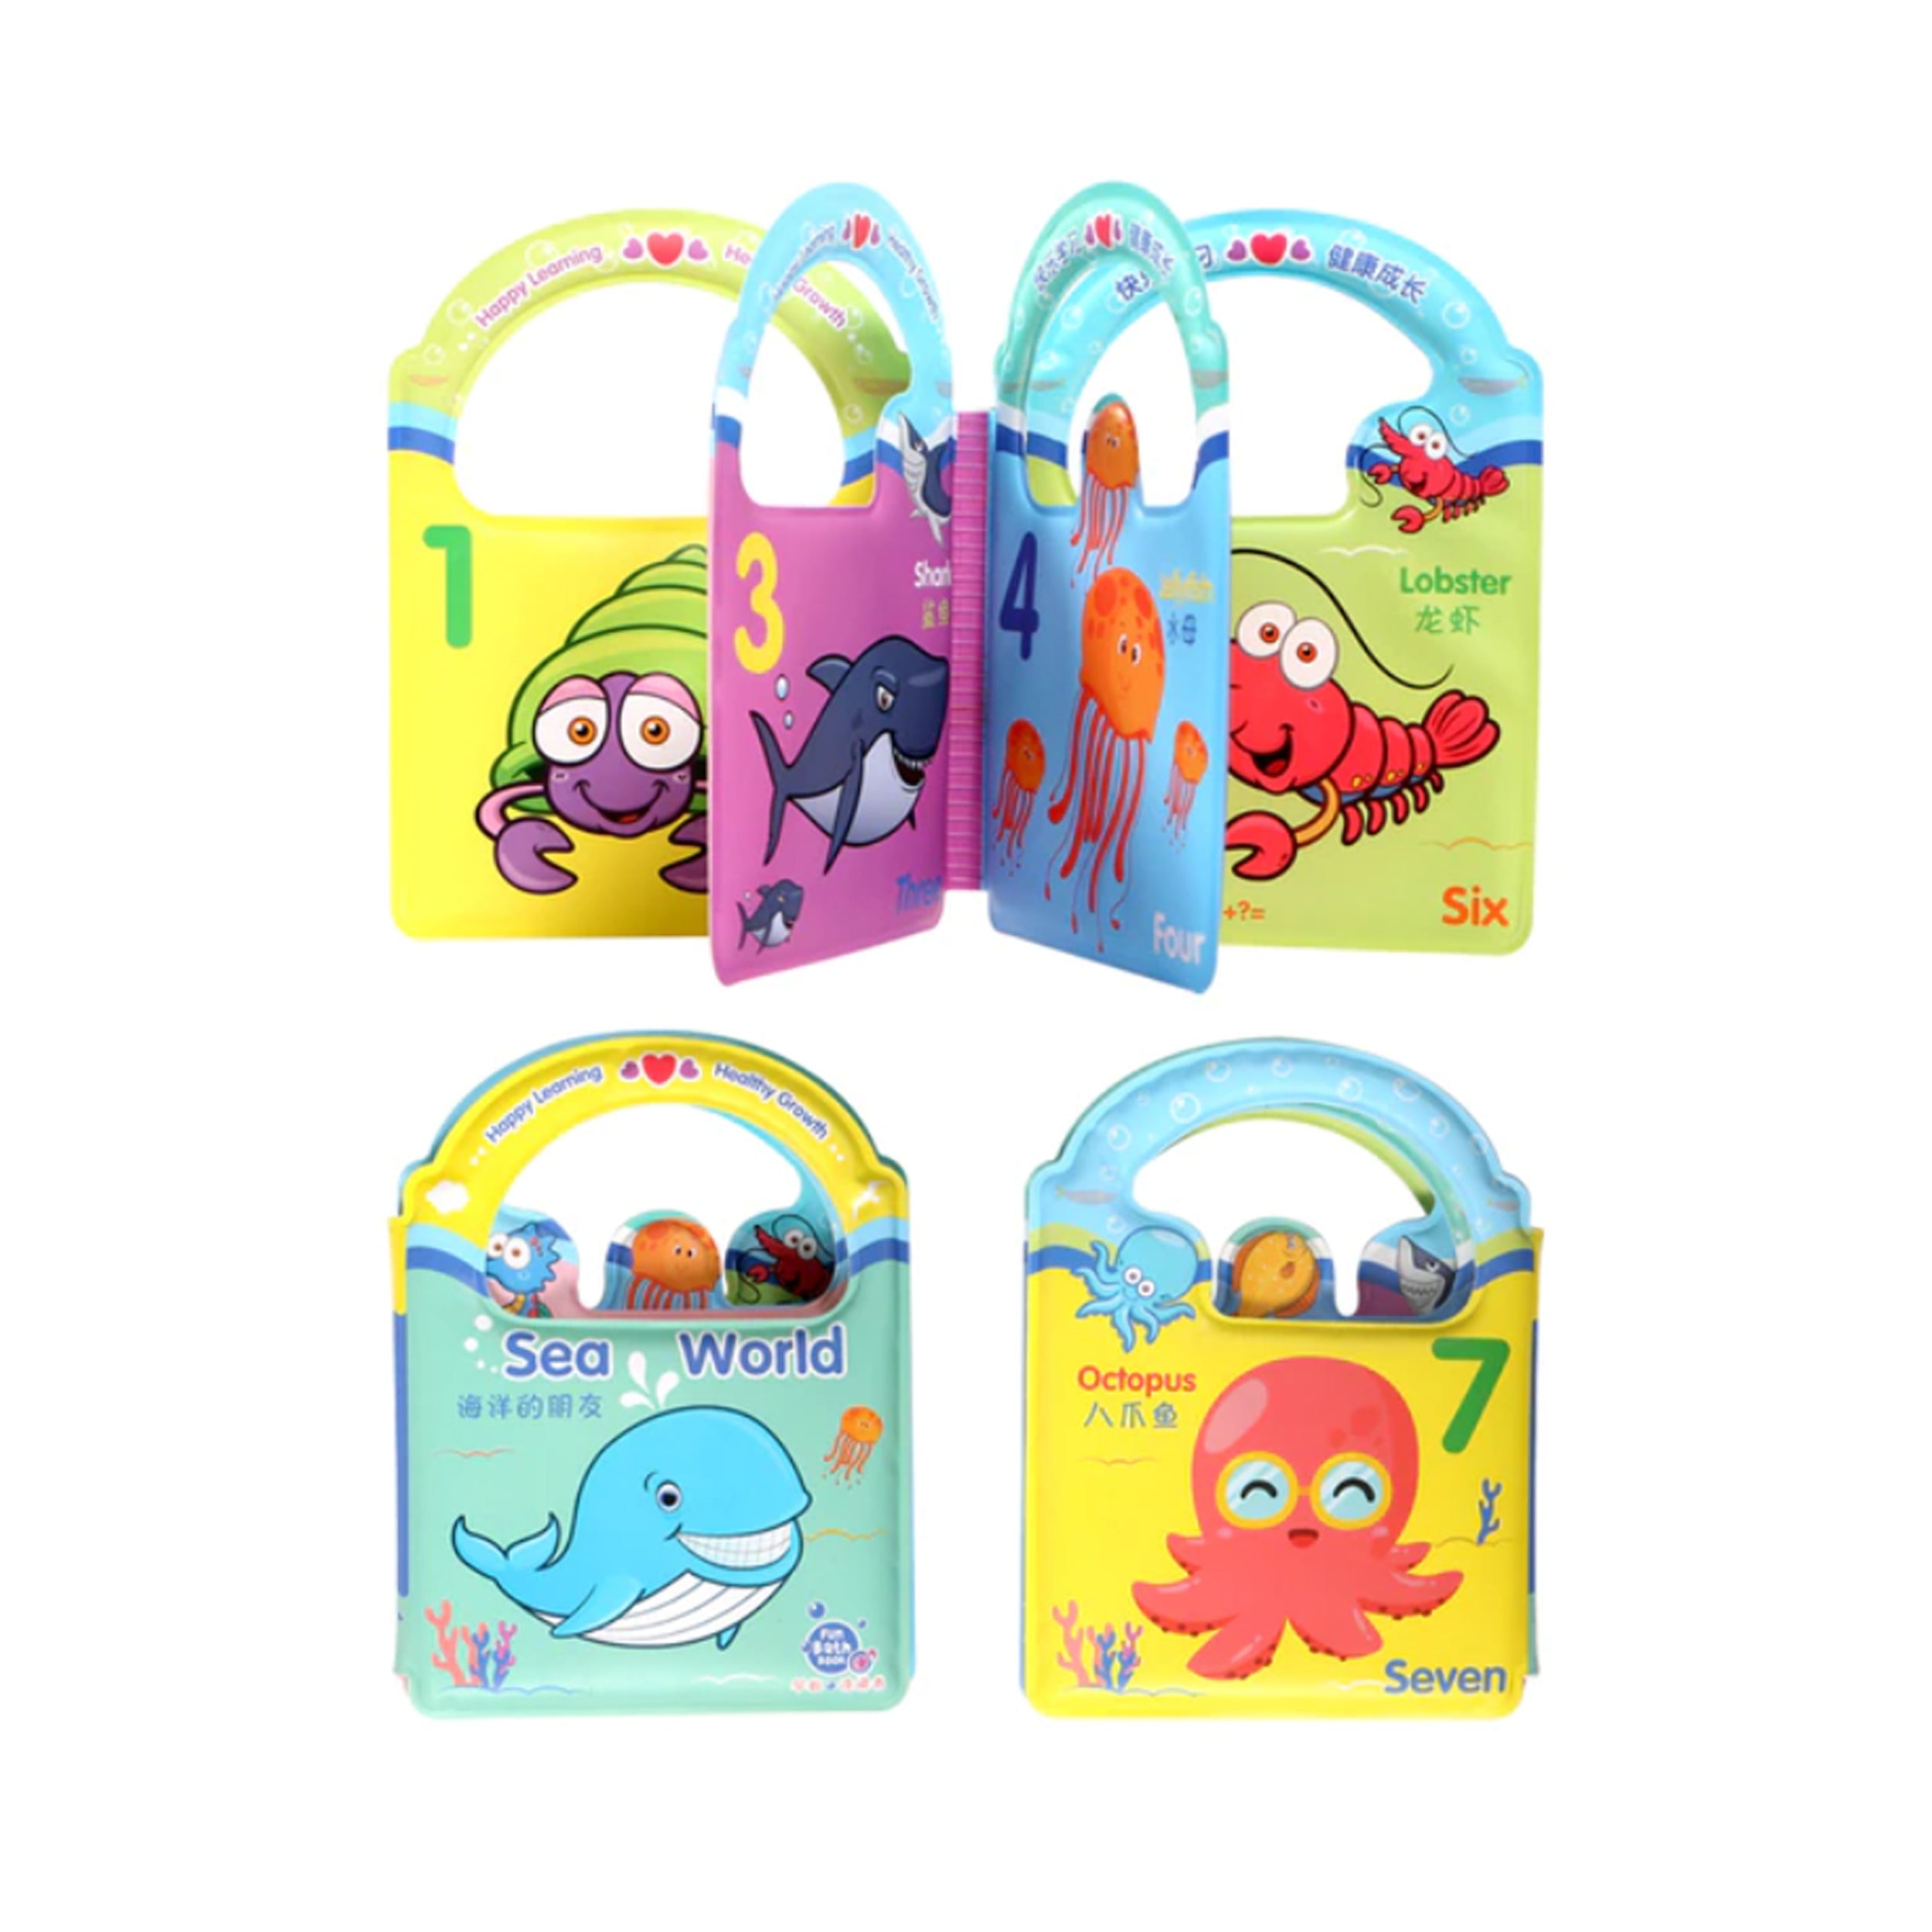 Splashy Fun! Waterproof Soft Free Toys For Kids - Assorted